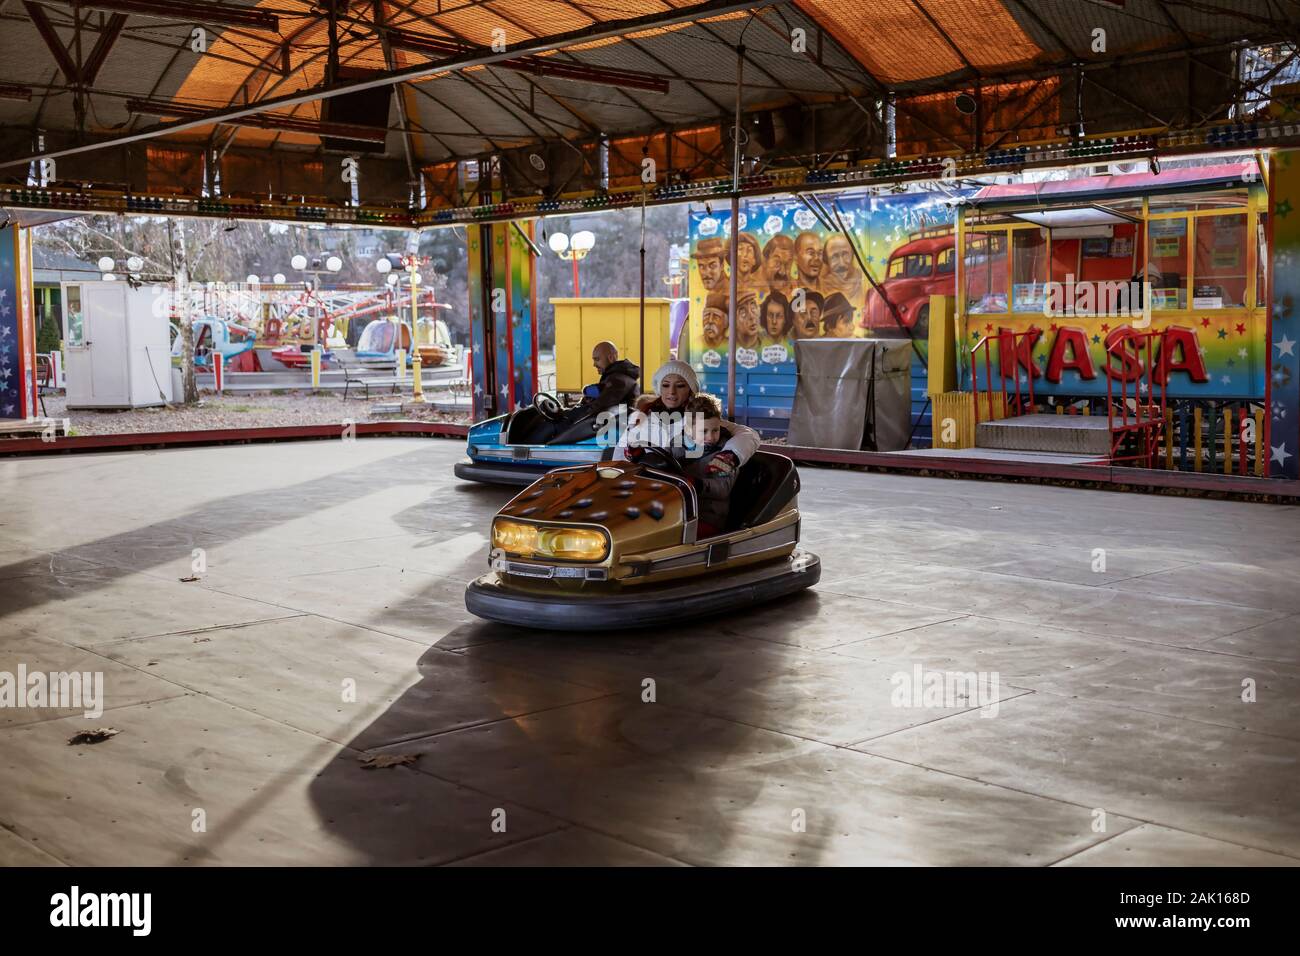 Belgrade, Serbia, Jan 5, 2020: Mother and son riding dodgem car at a funfair Stock Photo